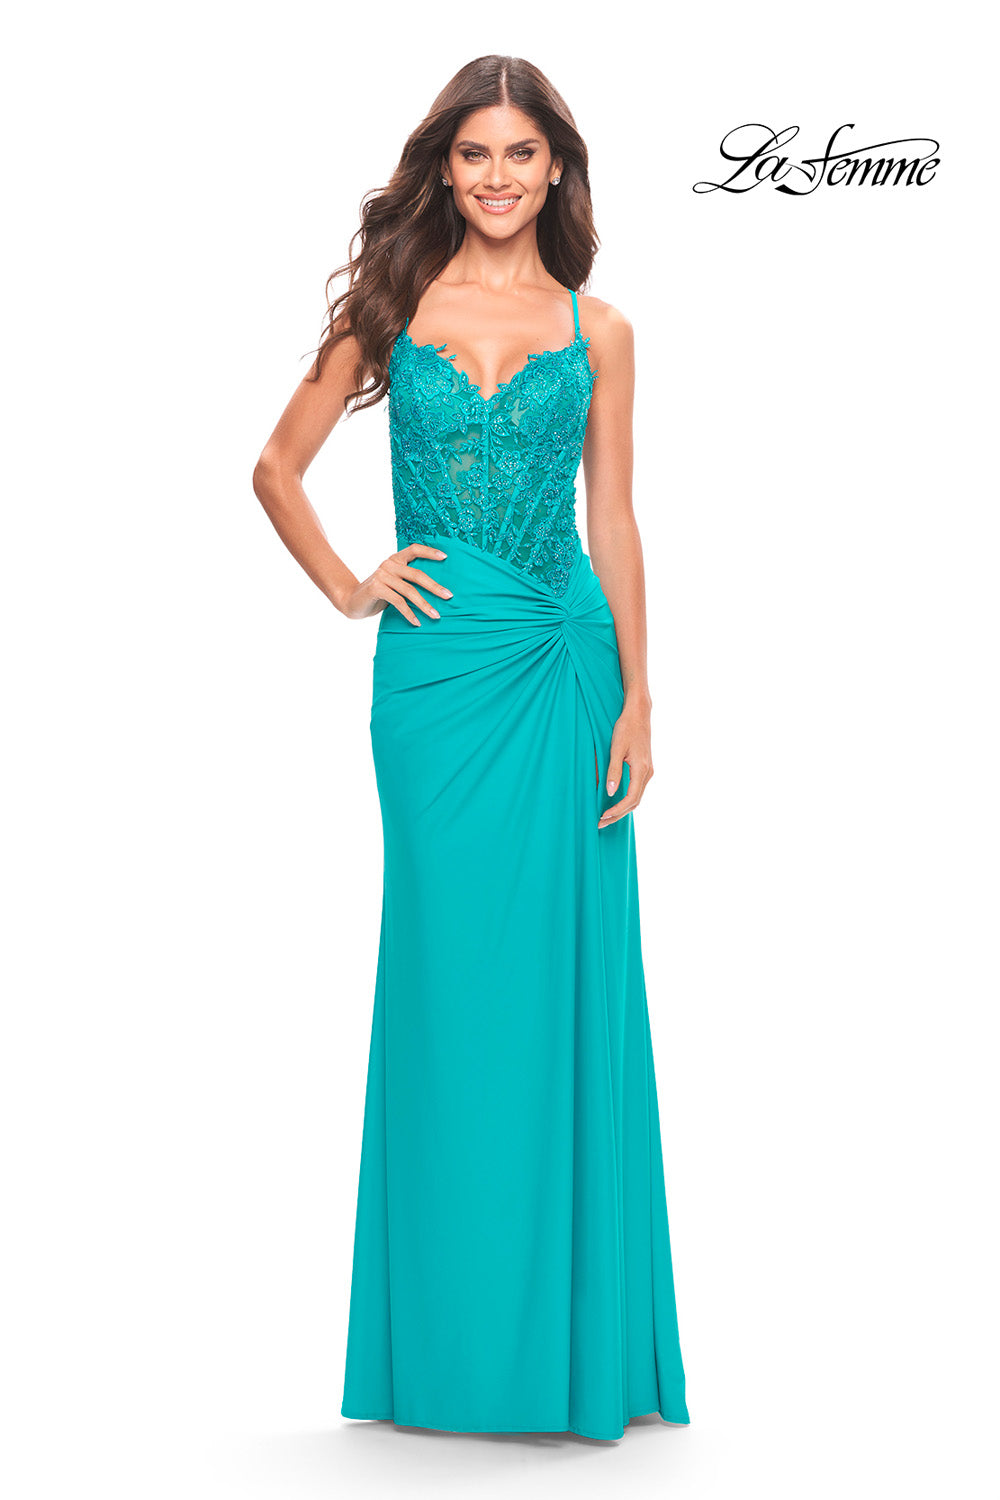 La Femme 31447 prom dress images.  La Femme 31447 is available in these colors: Aqua, Hot Coral.